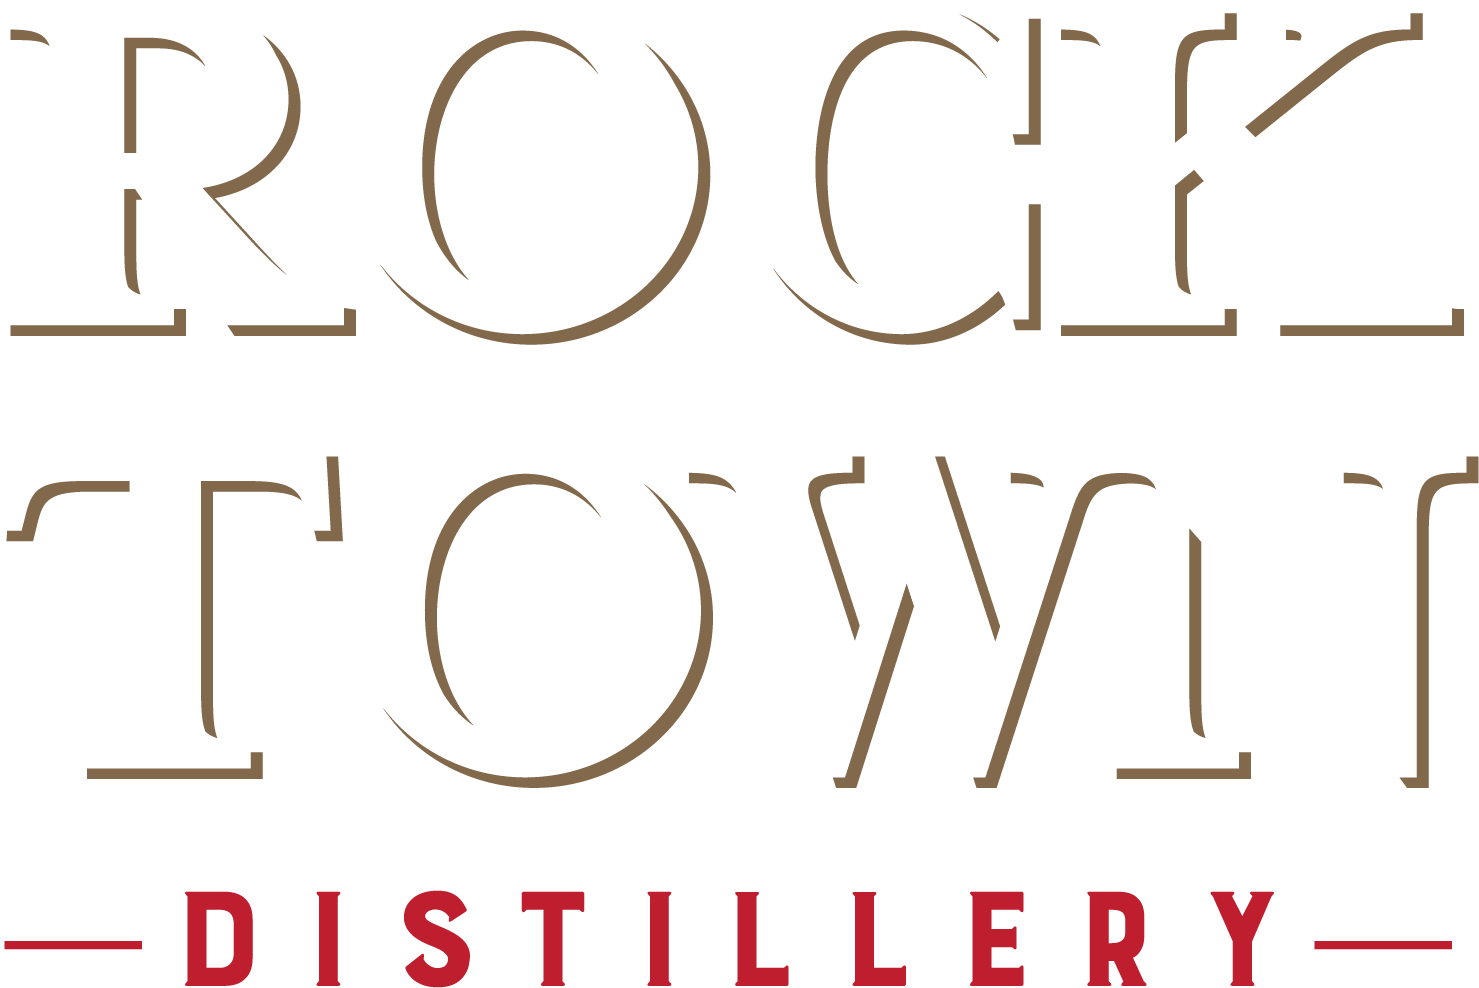 Rock Town Distillery